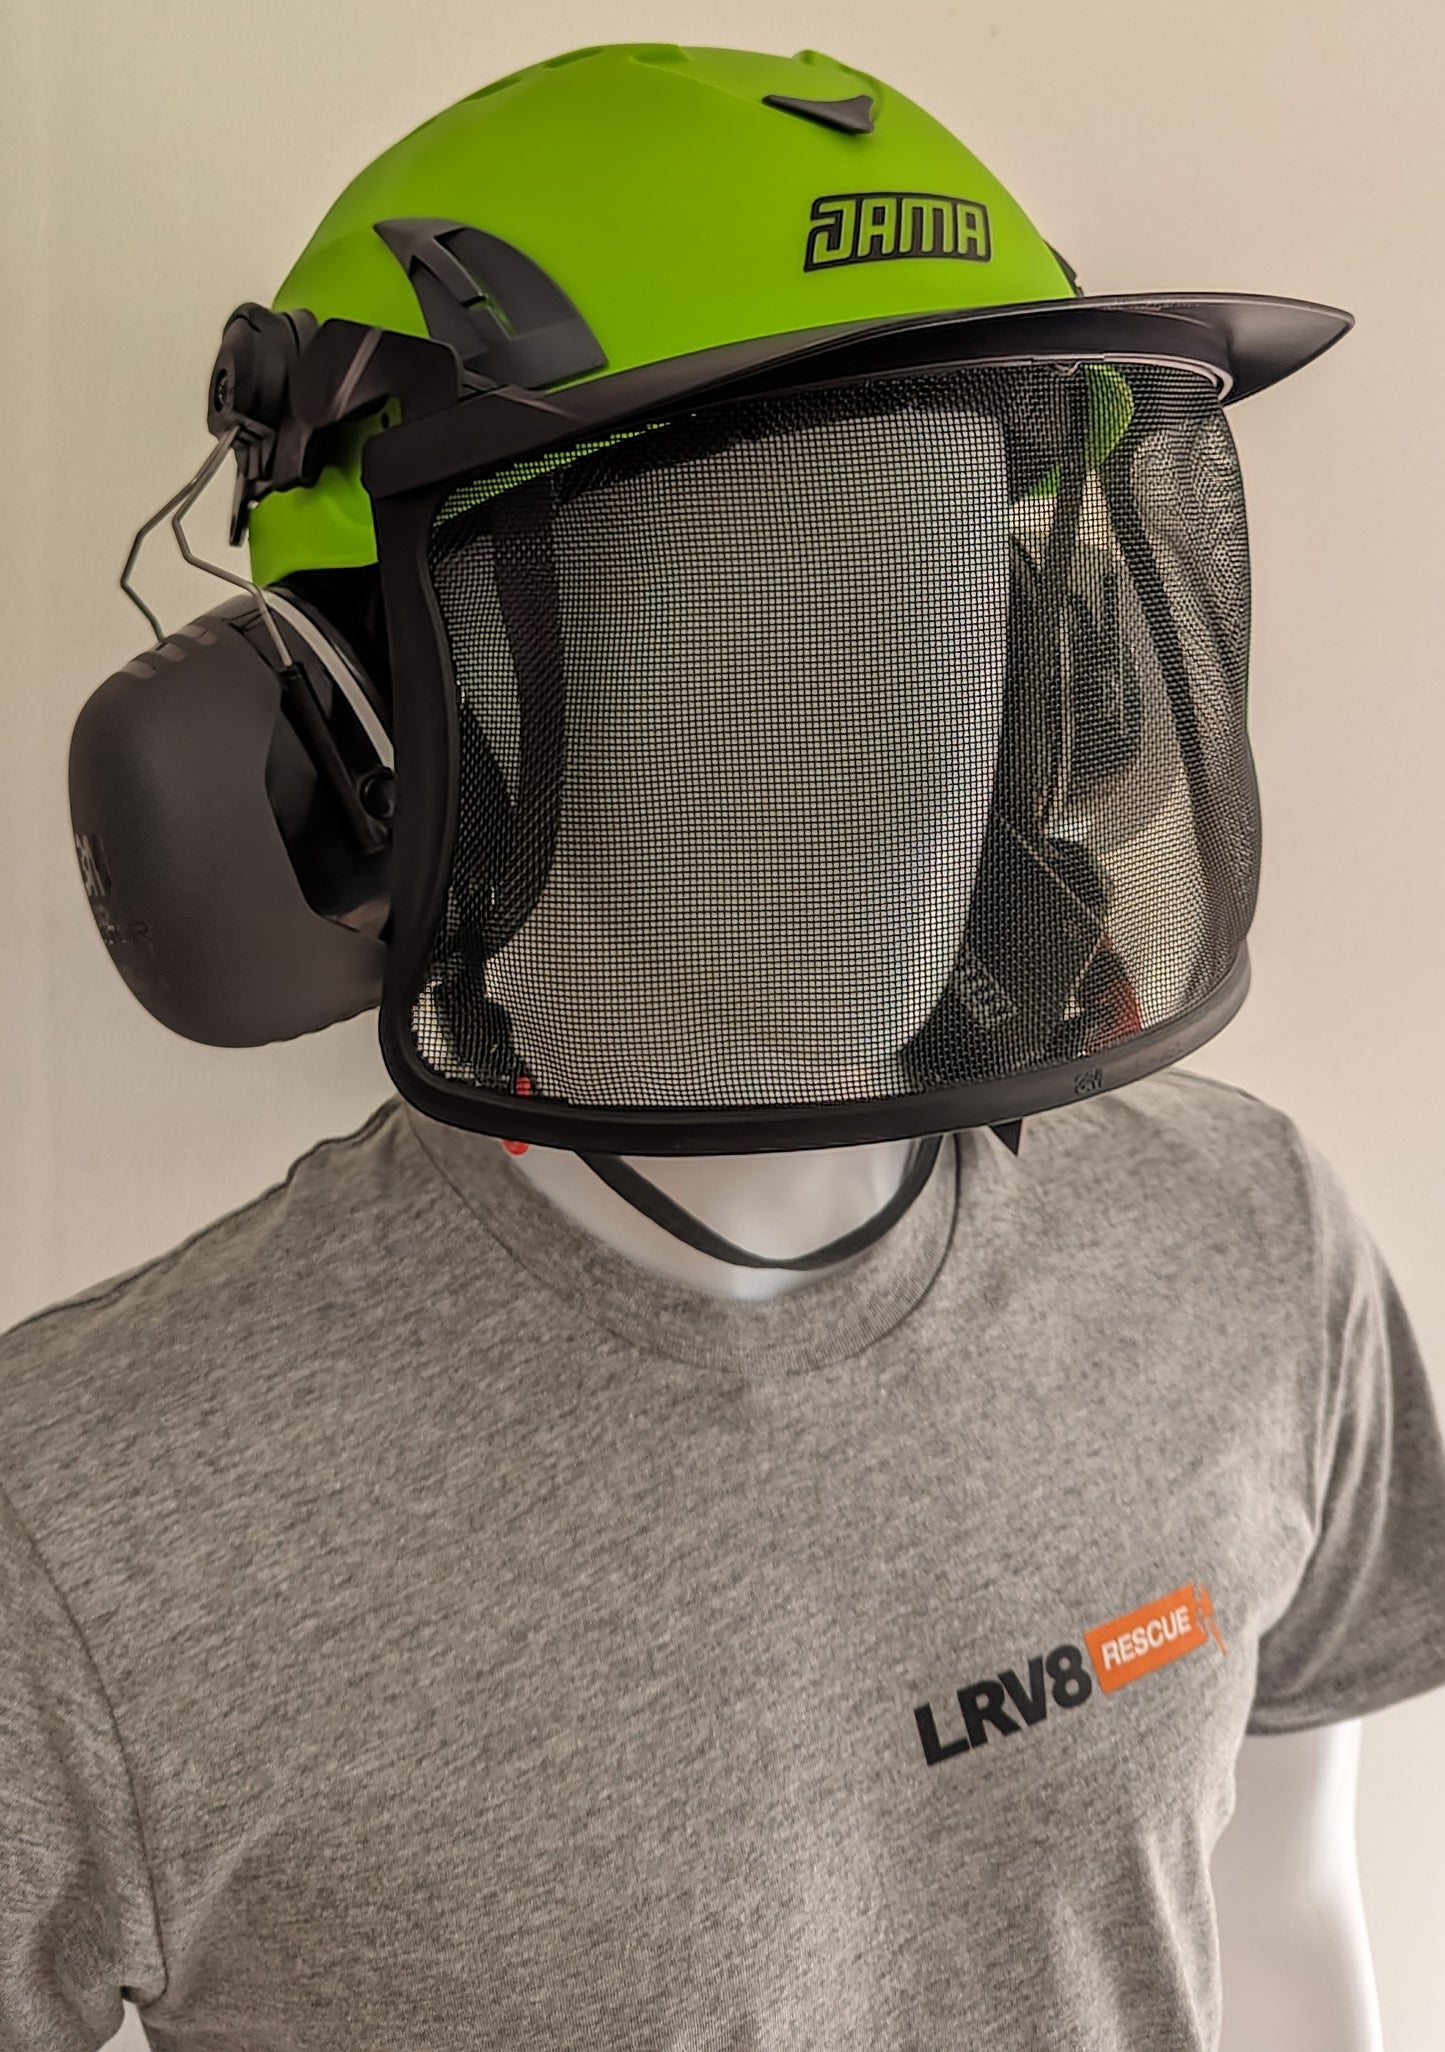 LRV8 Jama Safety Helmet Kit with Mesh Visor